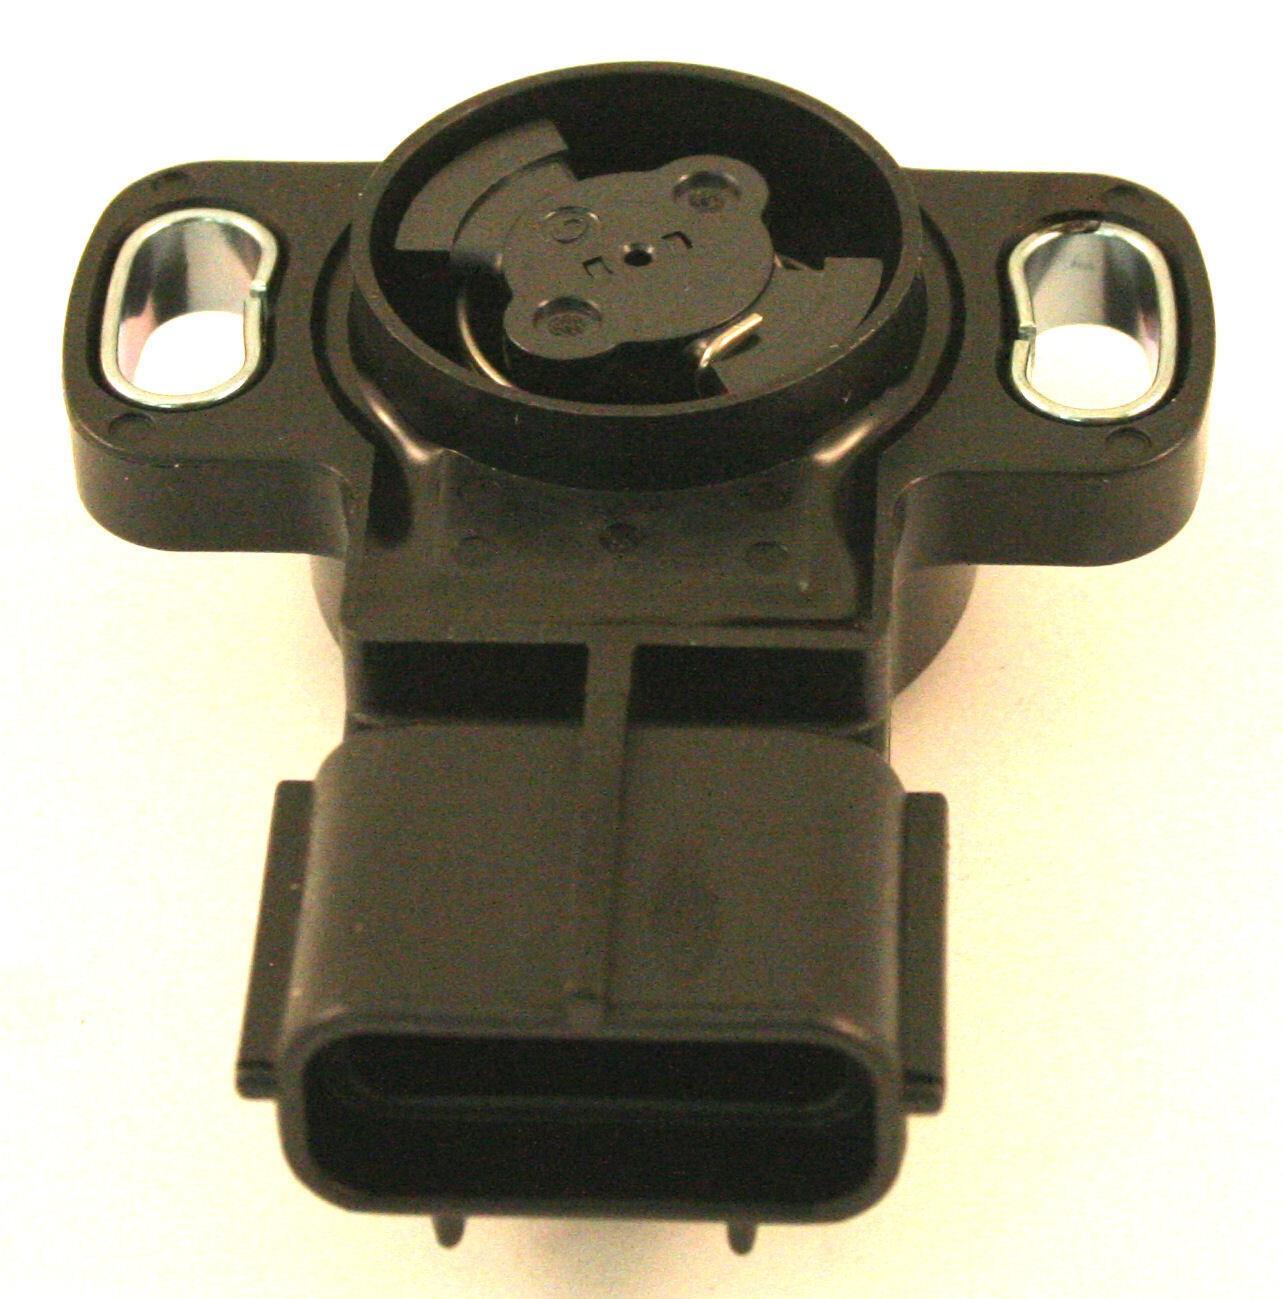 OEM TPS sensor for Suzuki Vitara SE416C 1/96 - 12/96 G16B SOHC 16v MPFI 4cyl 1.6L Manual 4WD 2D Soft Top